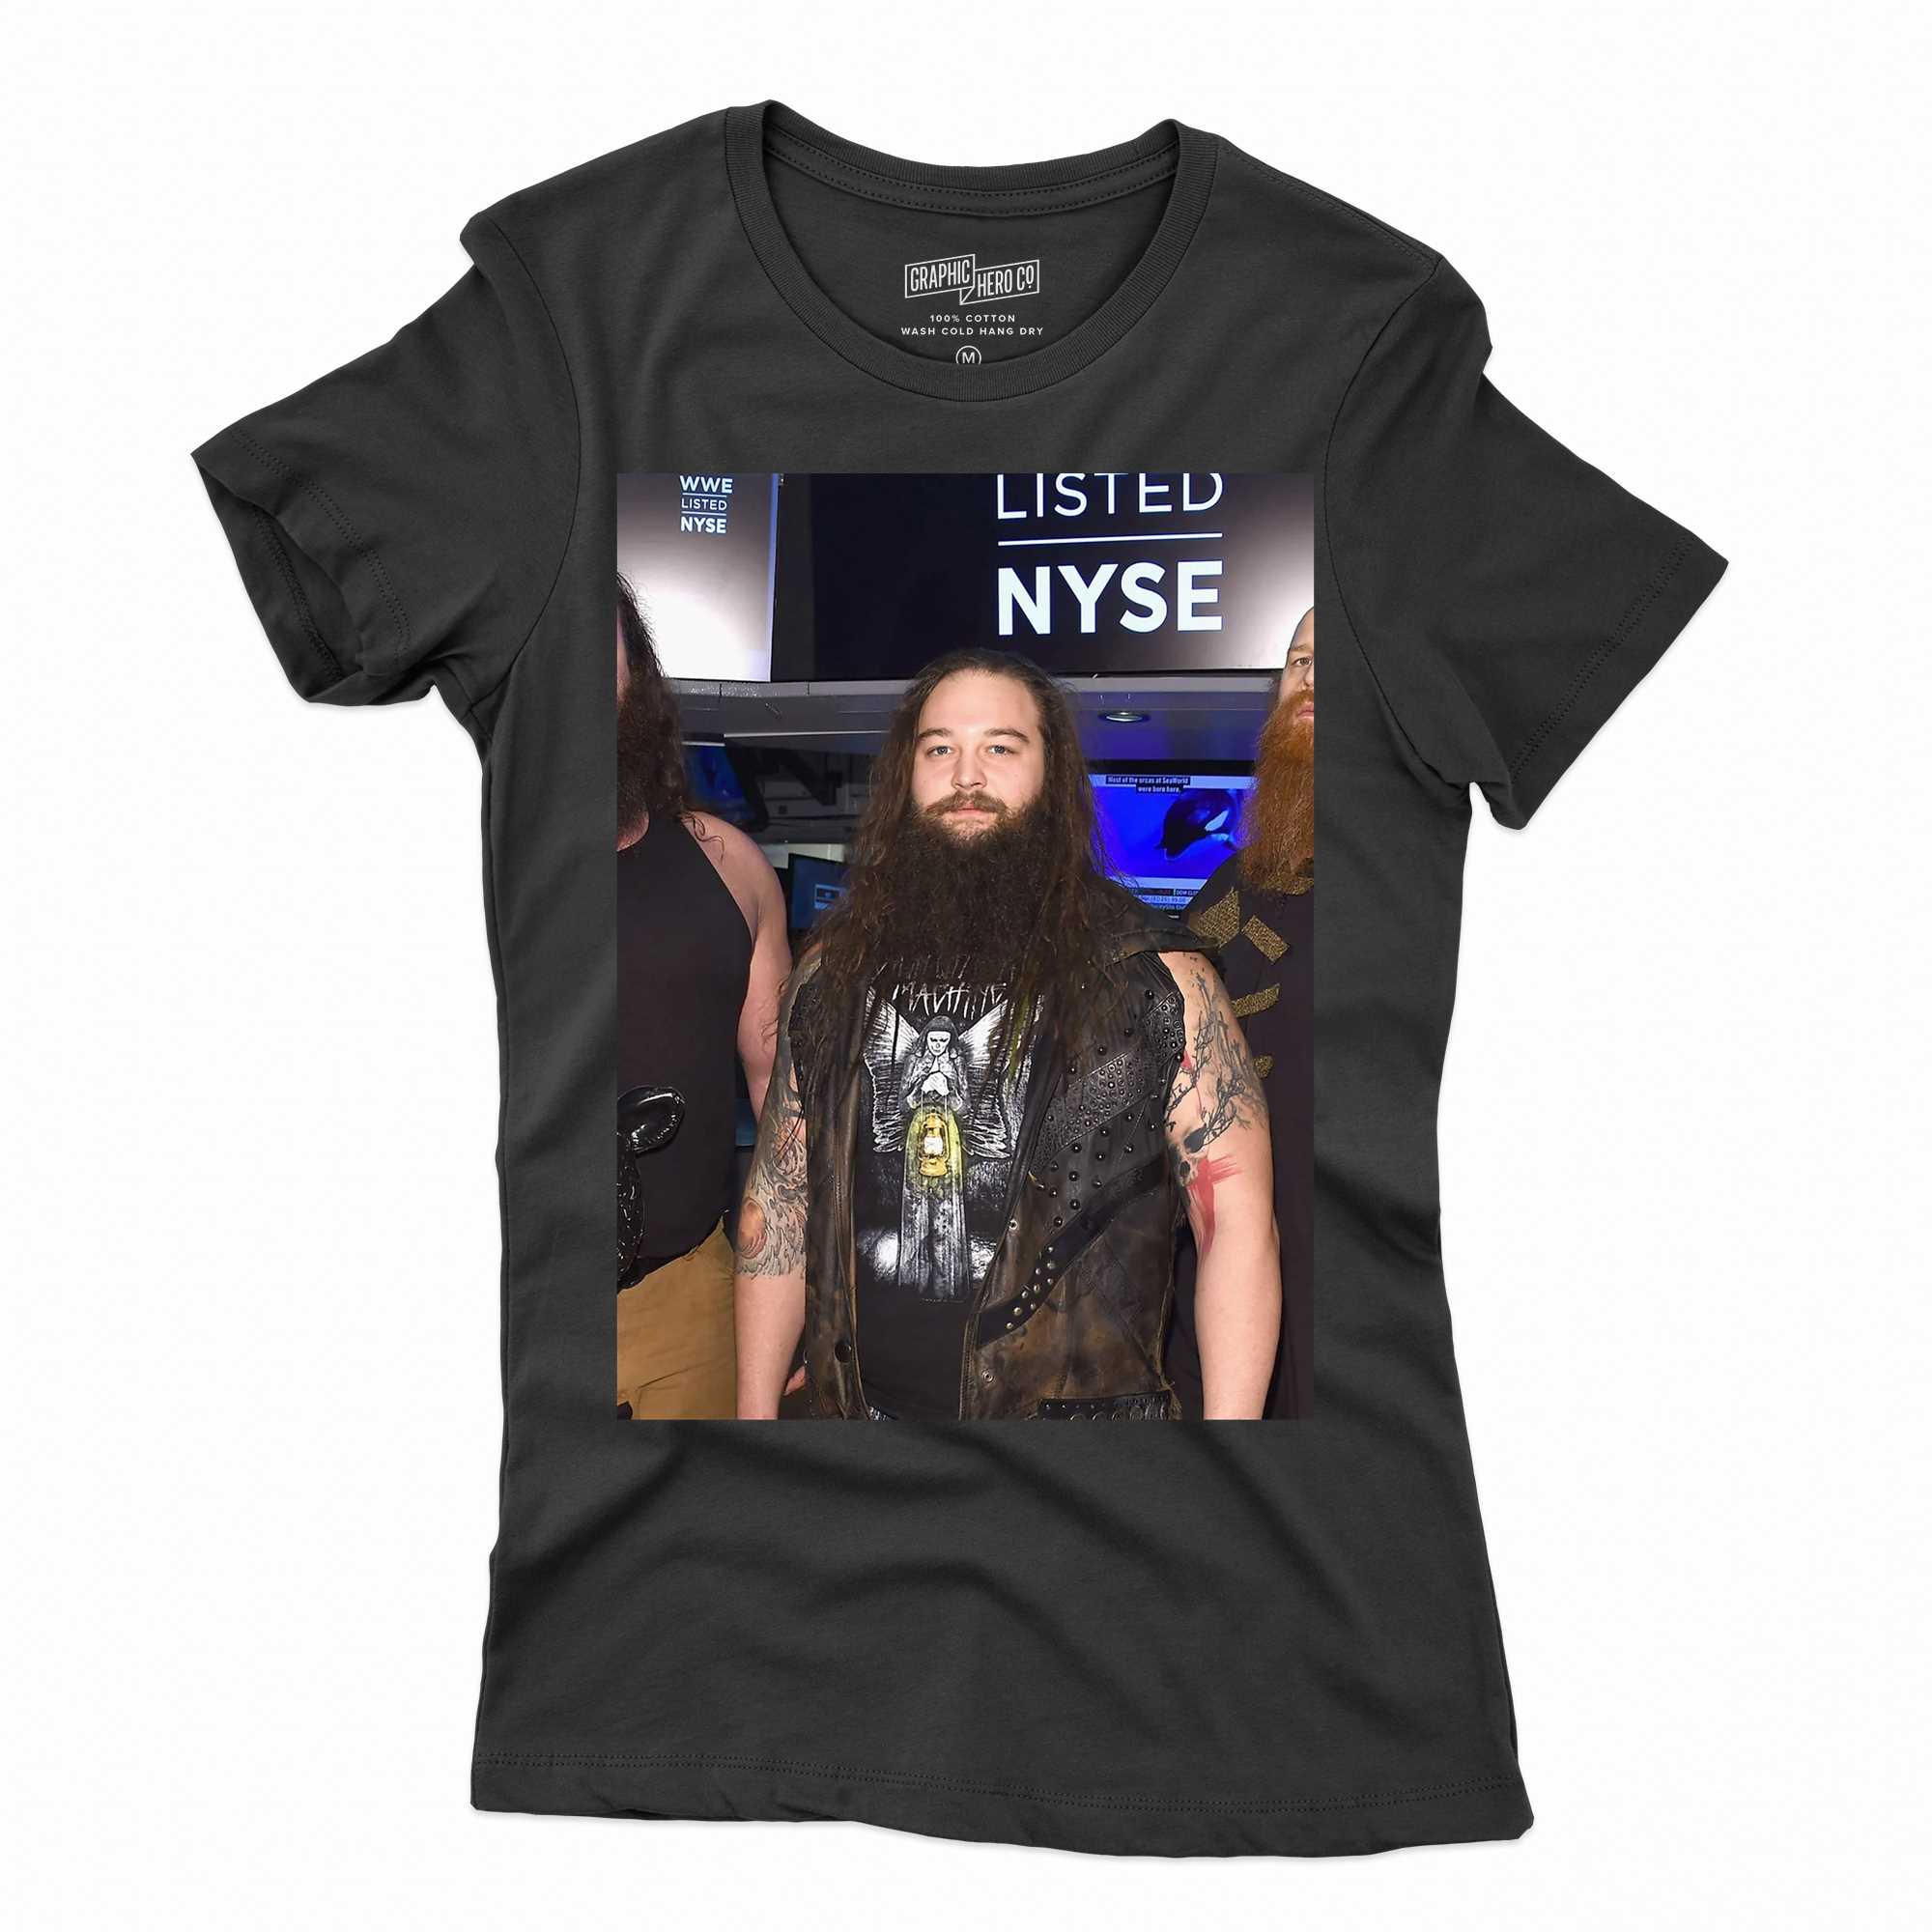 Bray Wyatt Shirt, Legends Never Die Shirt, Windham Lawrence